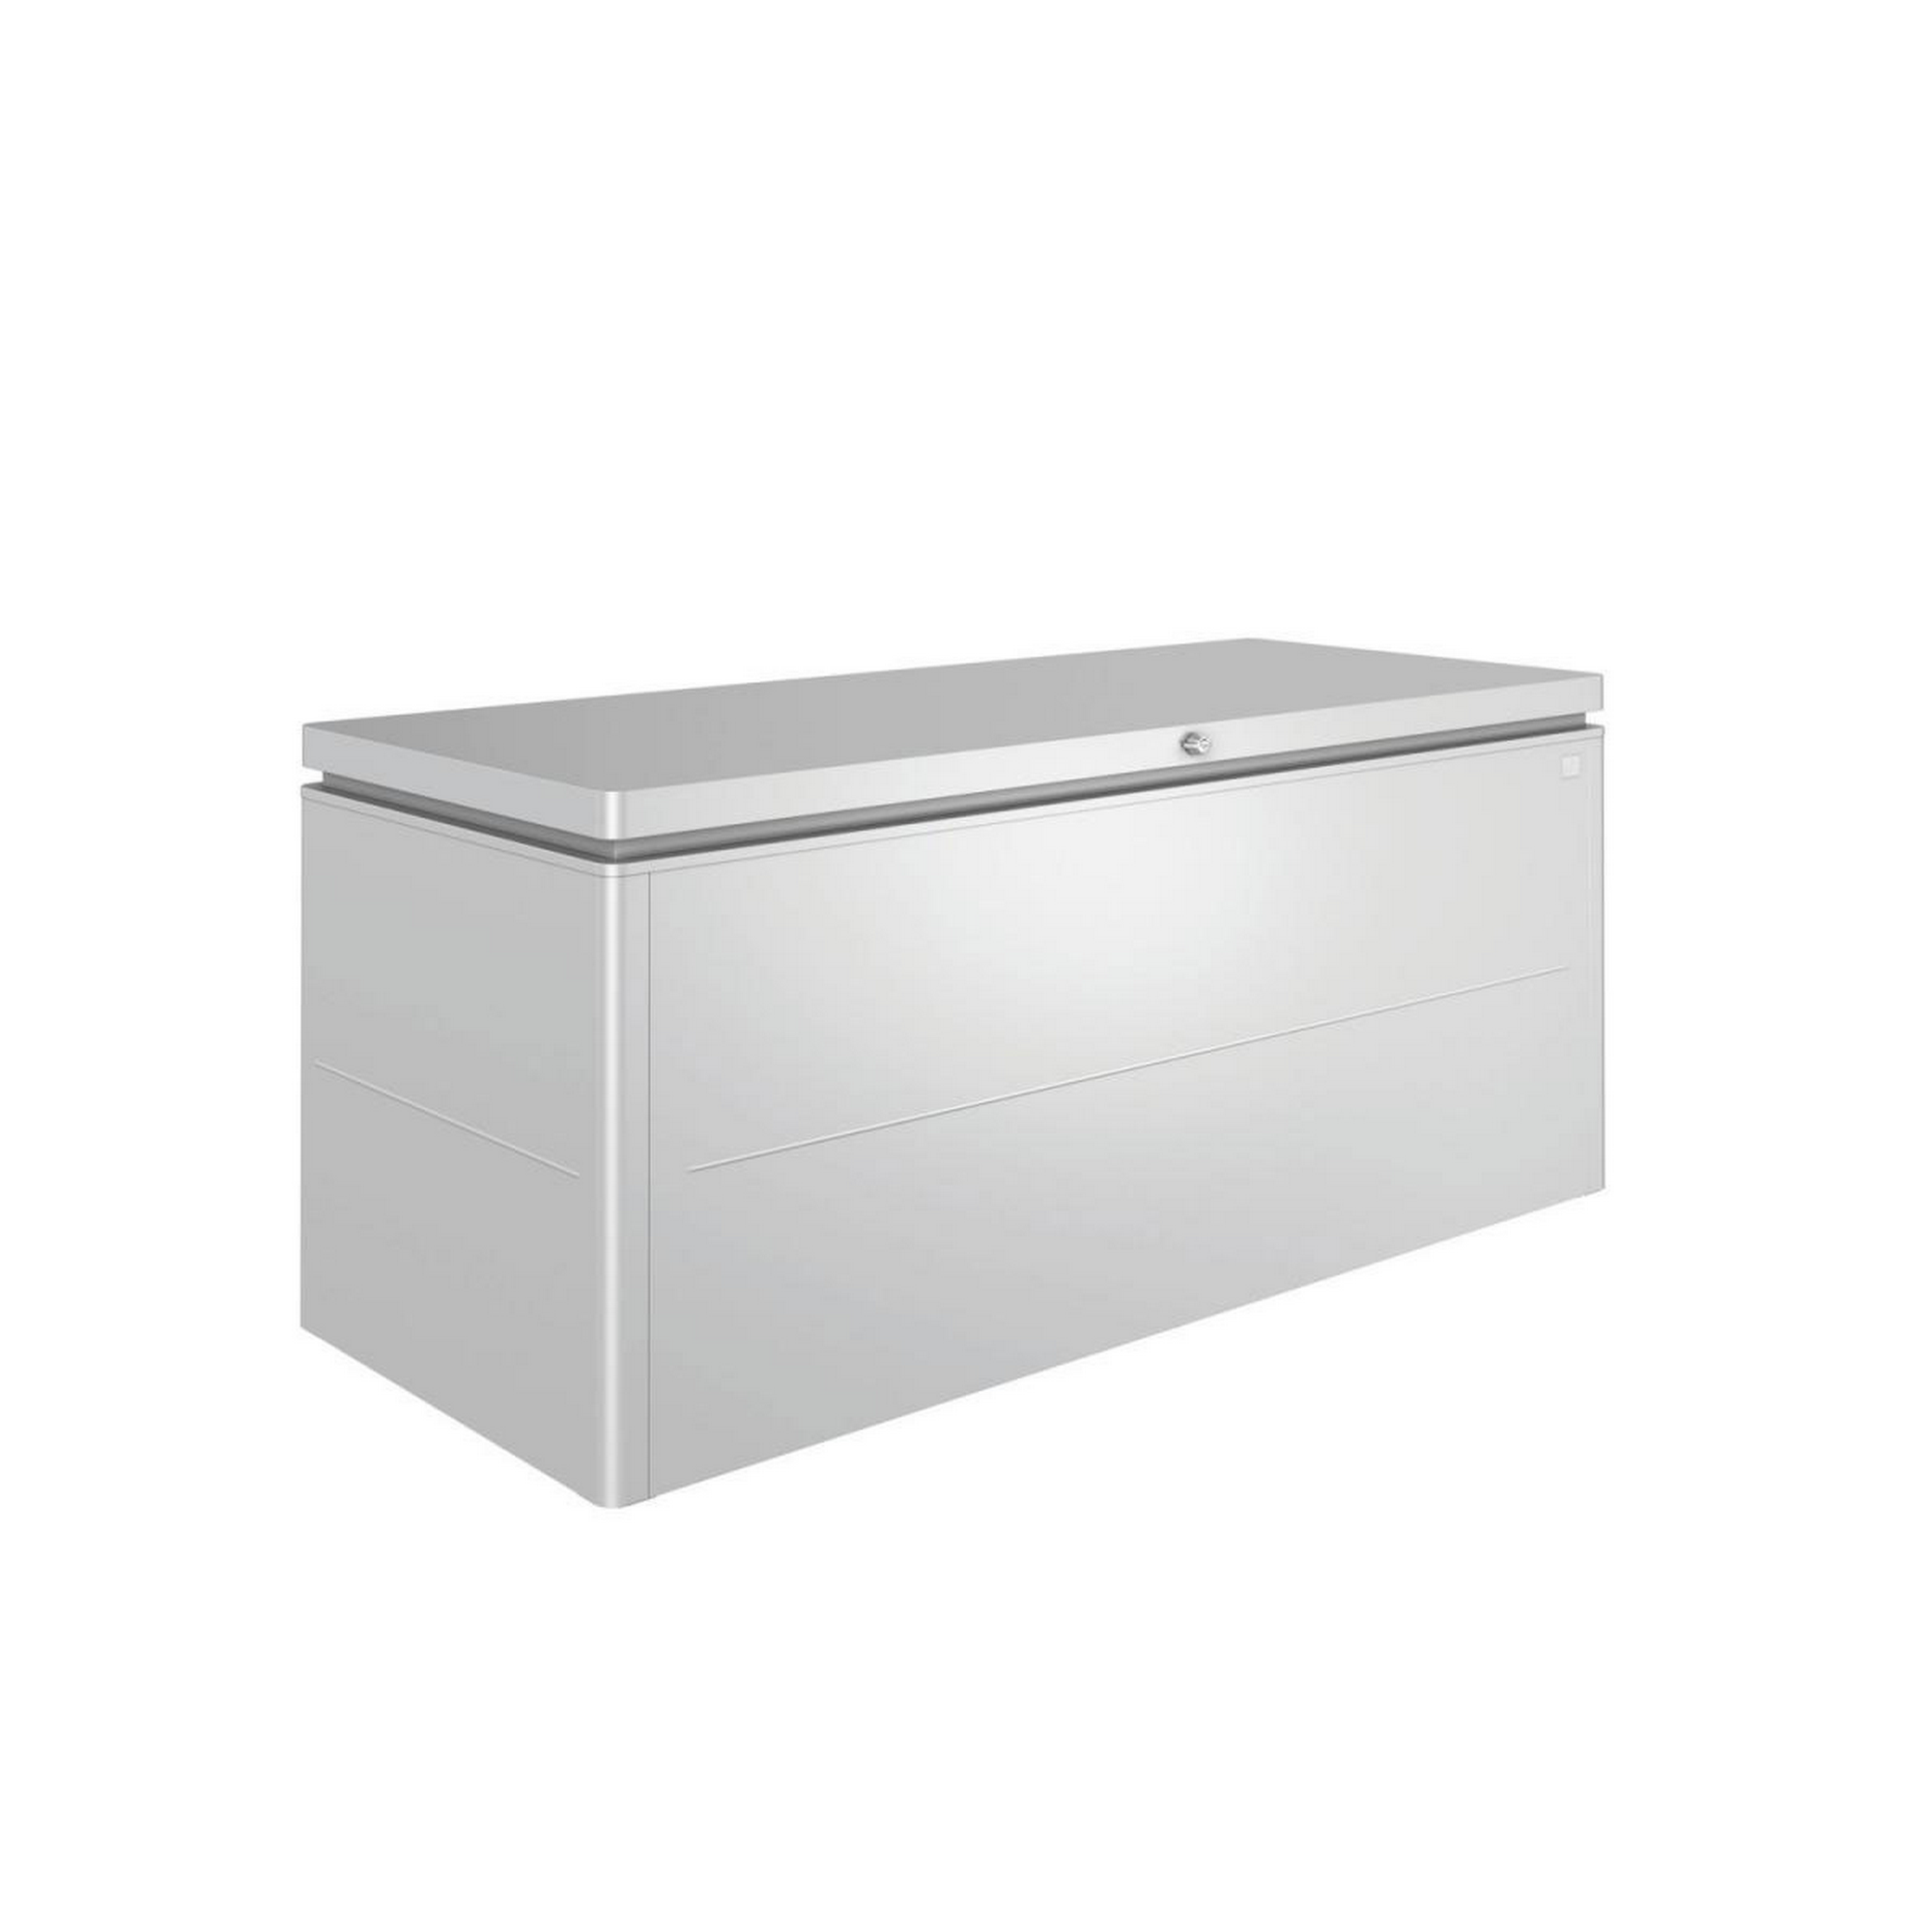 Aufbewahrungsbox 'LoungeBox 200' silber metallic 200 x 84 x 88,5 cm + product picture